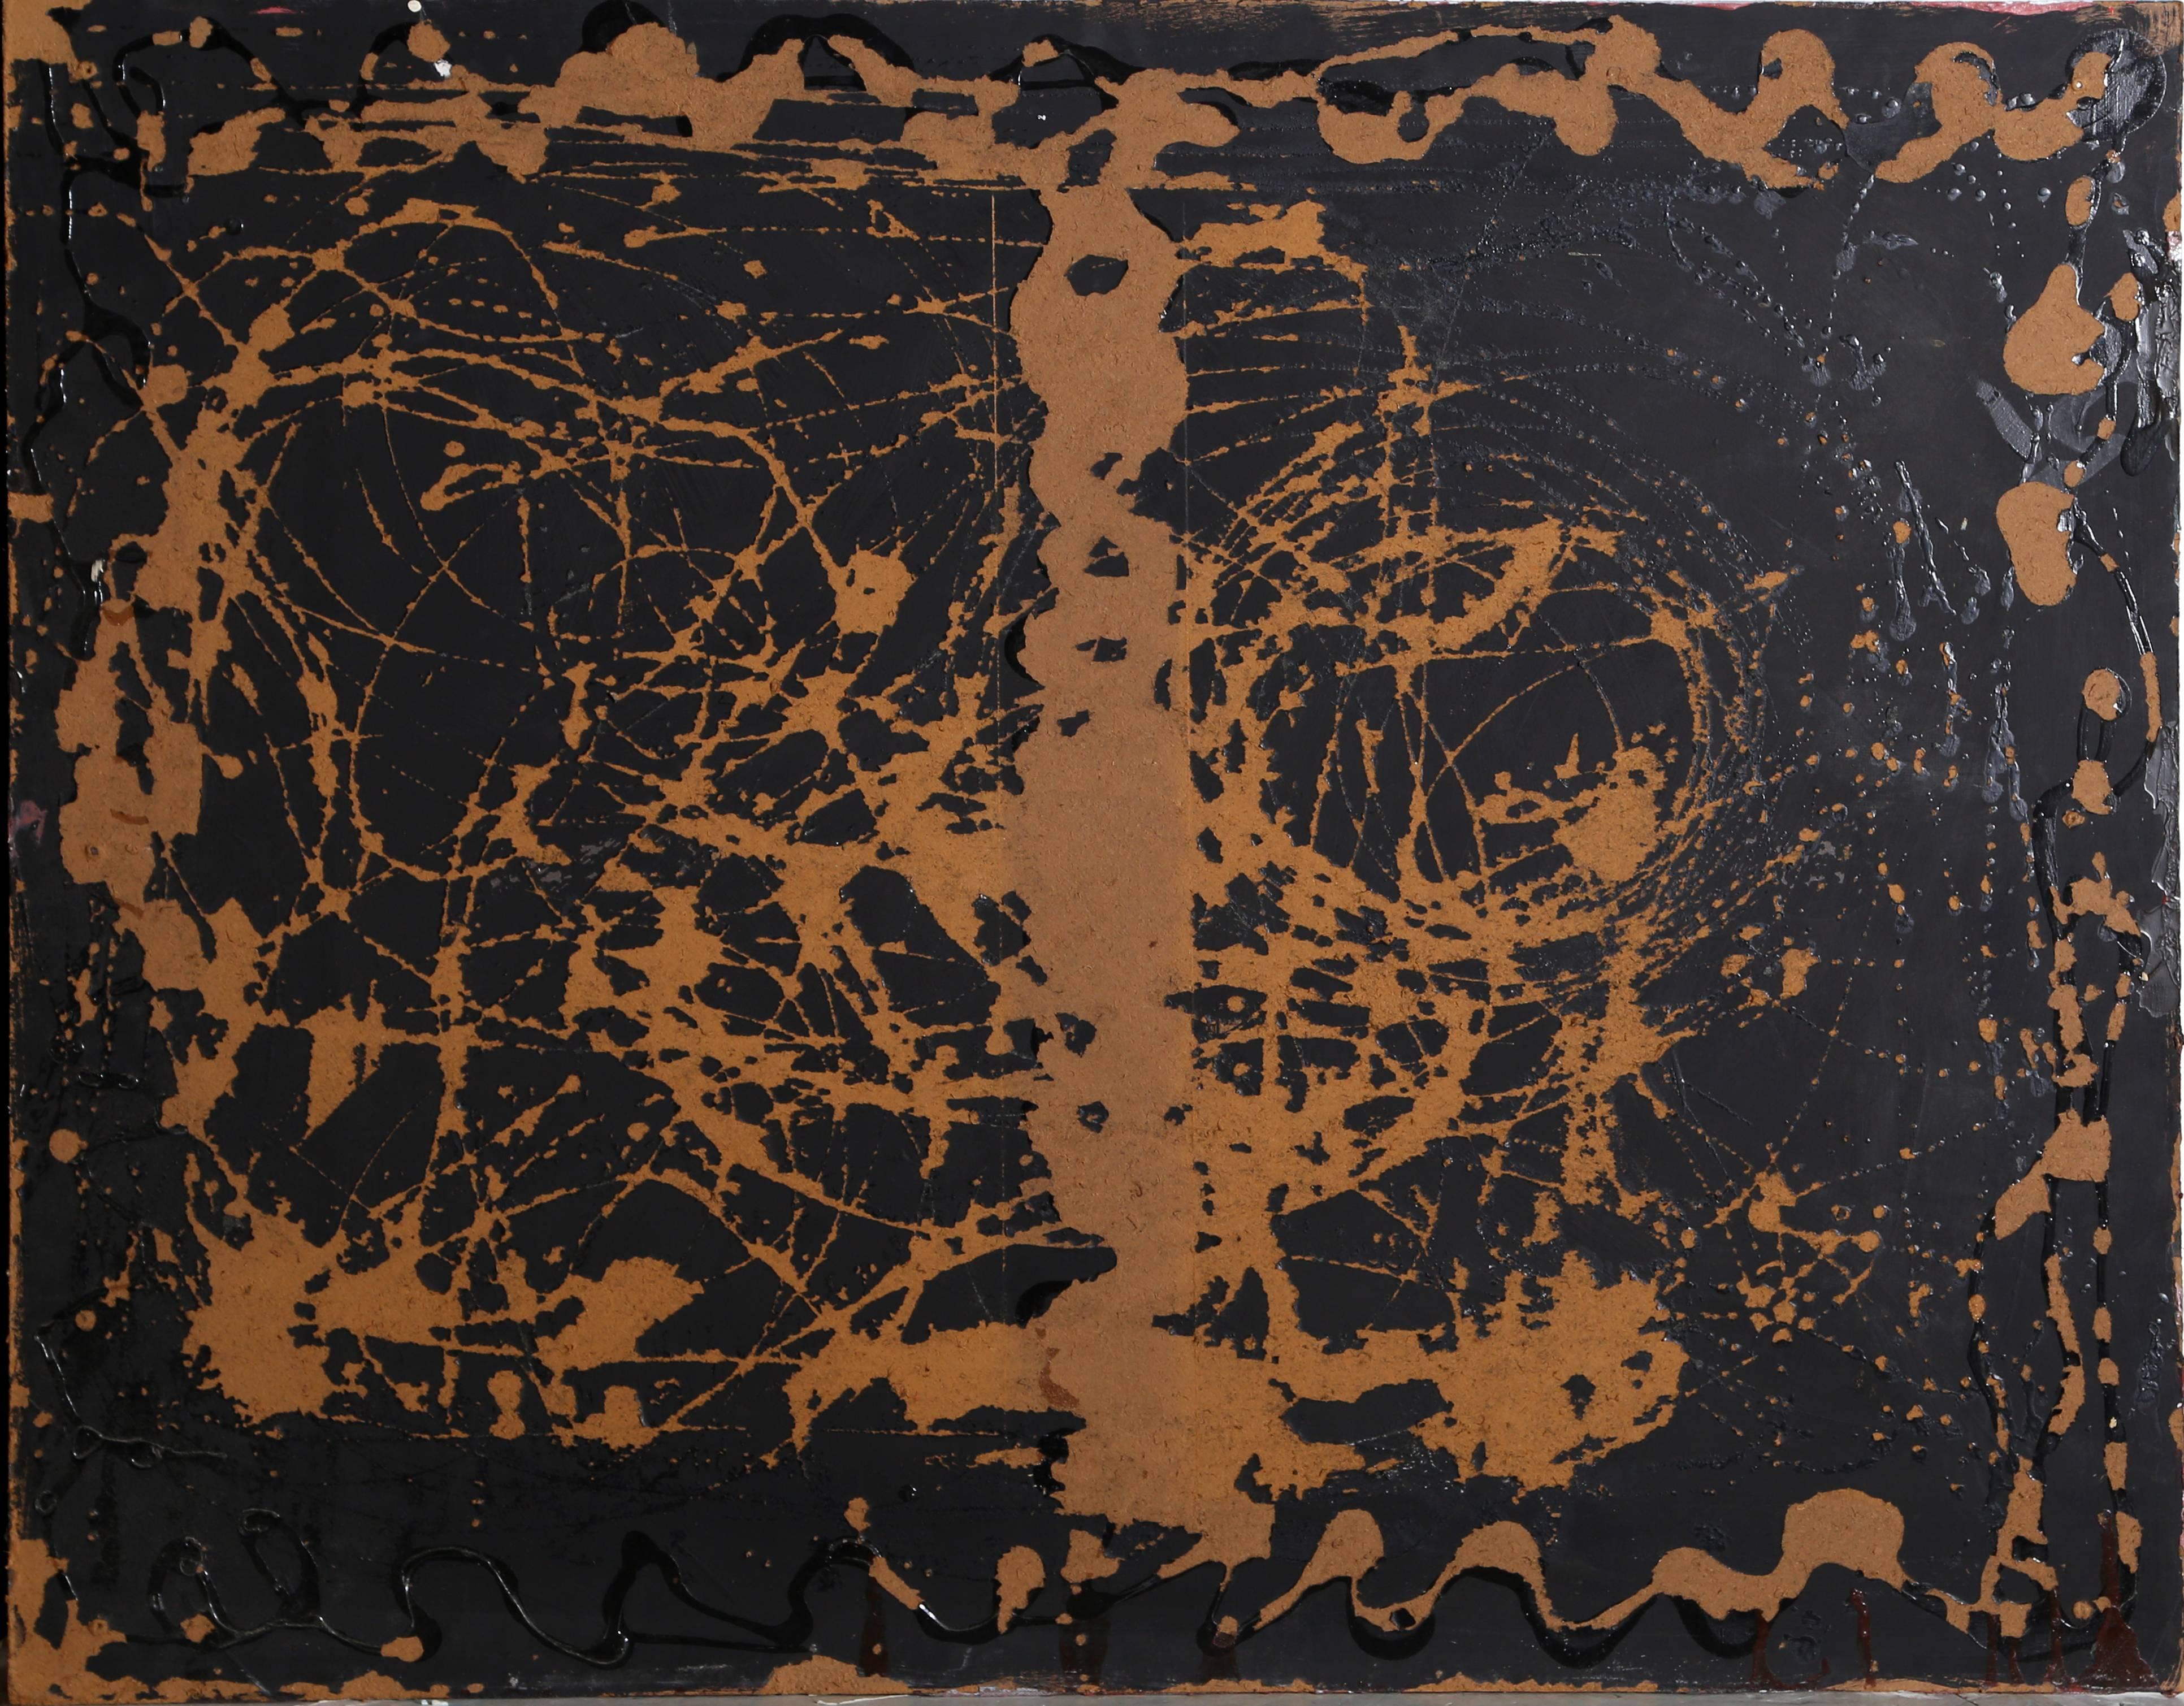 Artist: Robert Kuszek
Title: 6000 Feet Beyond
Year: 1990
Medium: Mixed Media on masonite: Oil, Acrylic and Enamel
Size: 40 x 32 in. (101.6 x 81.28 cm)